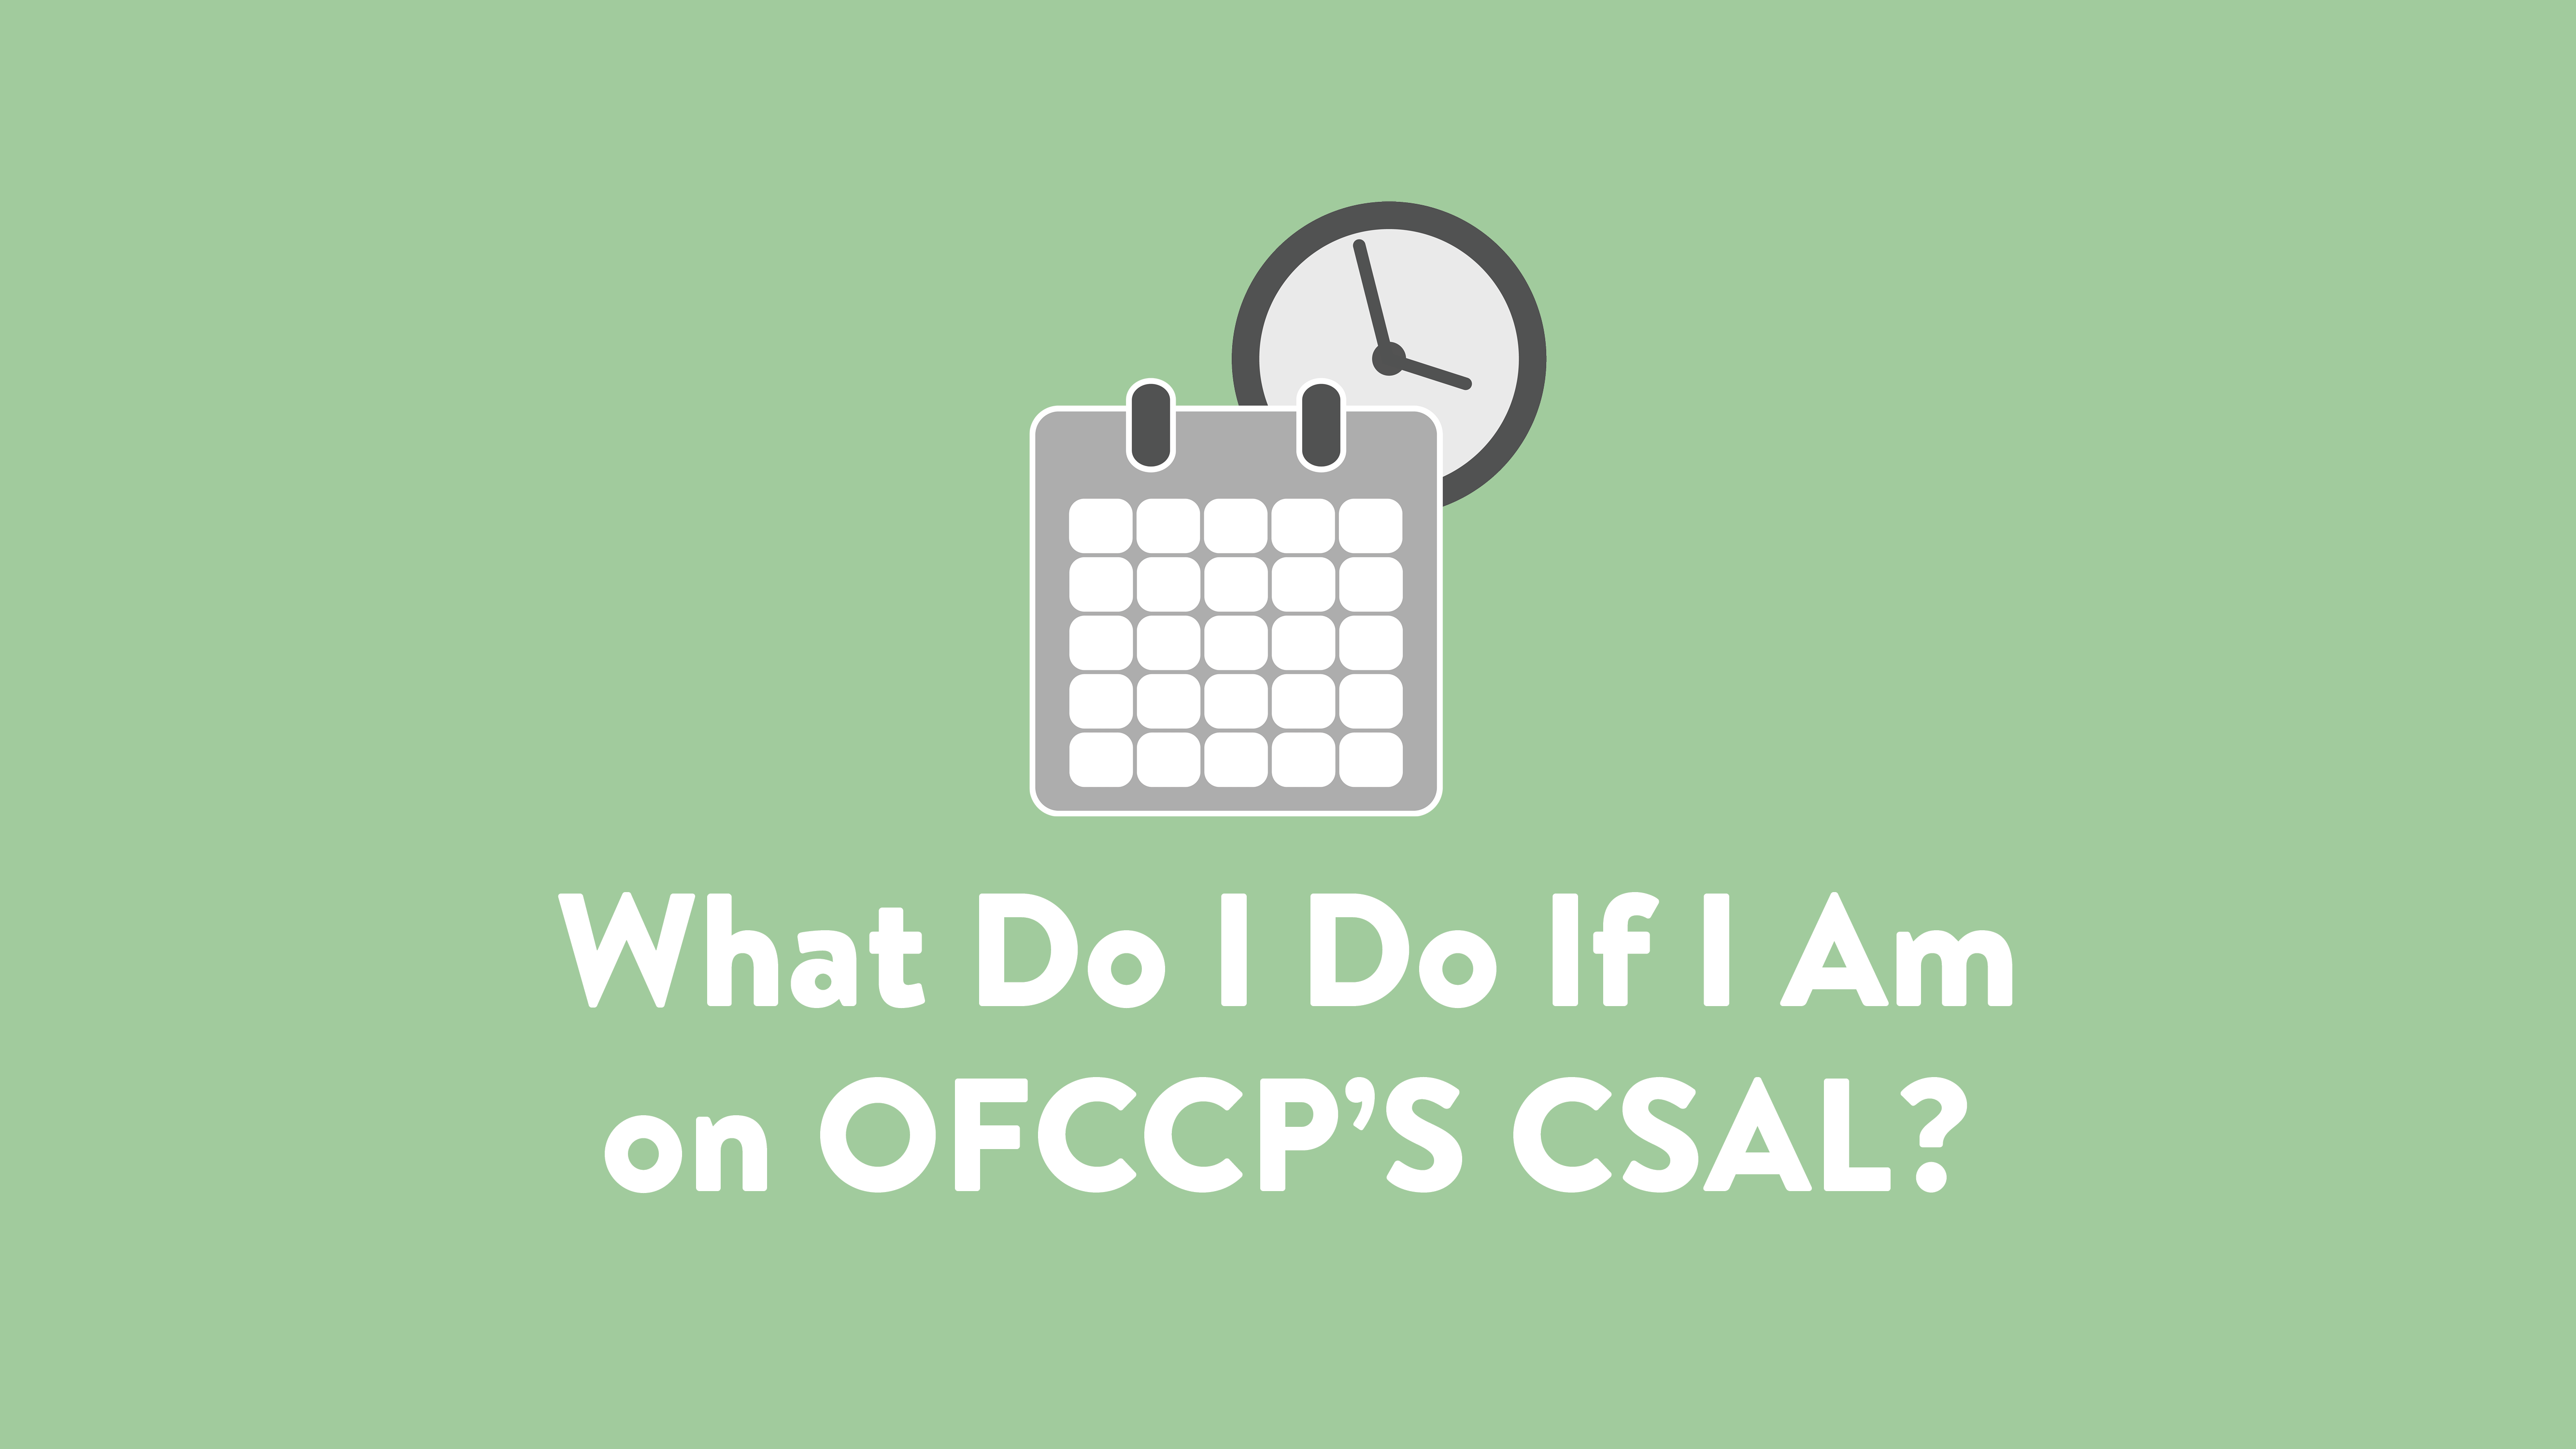 What Do I Do if I am on OFCCP's CSAL? 